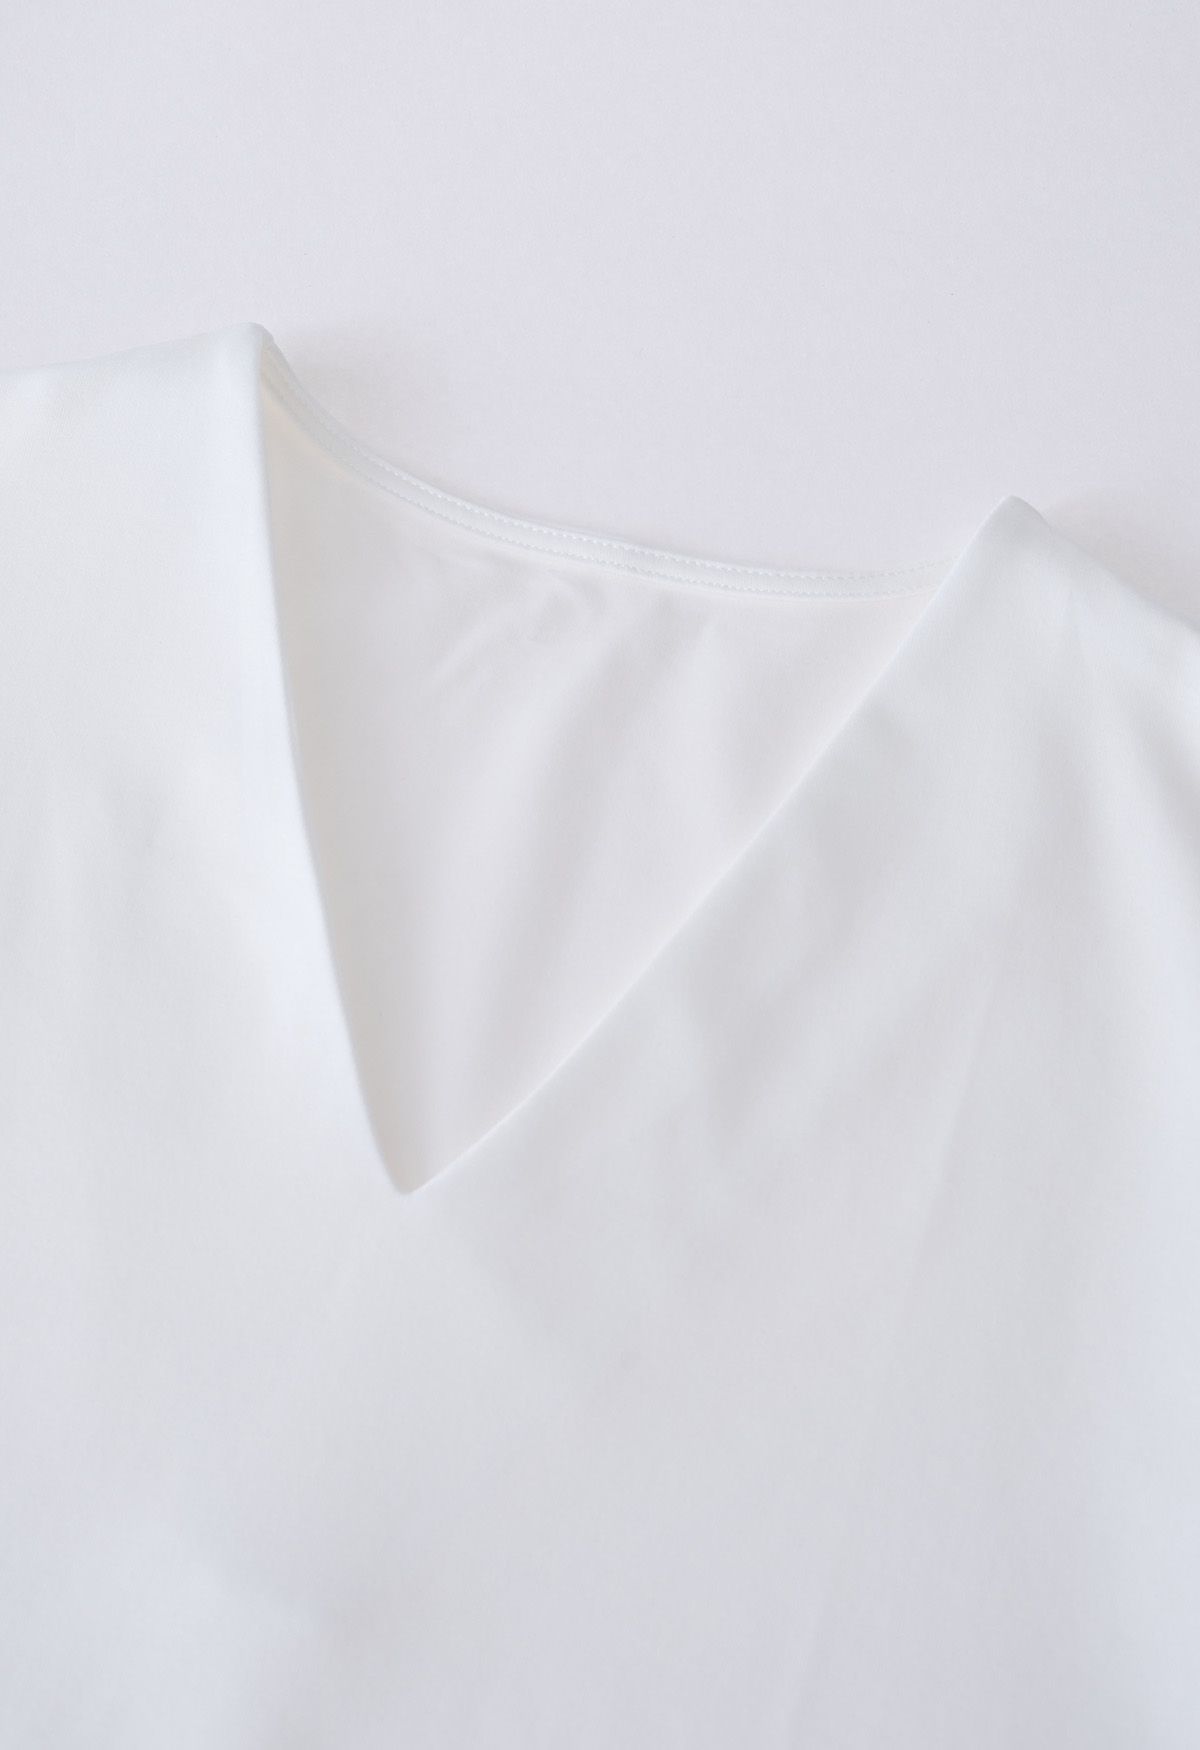 V-Neck Cotton T-Shirt in White